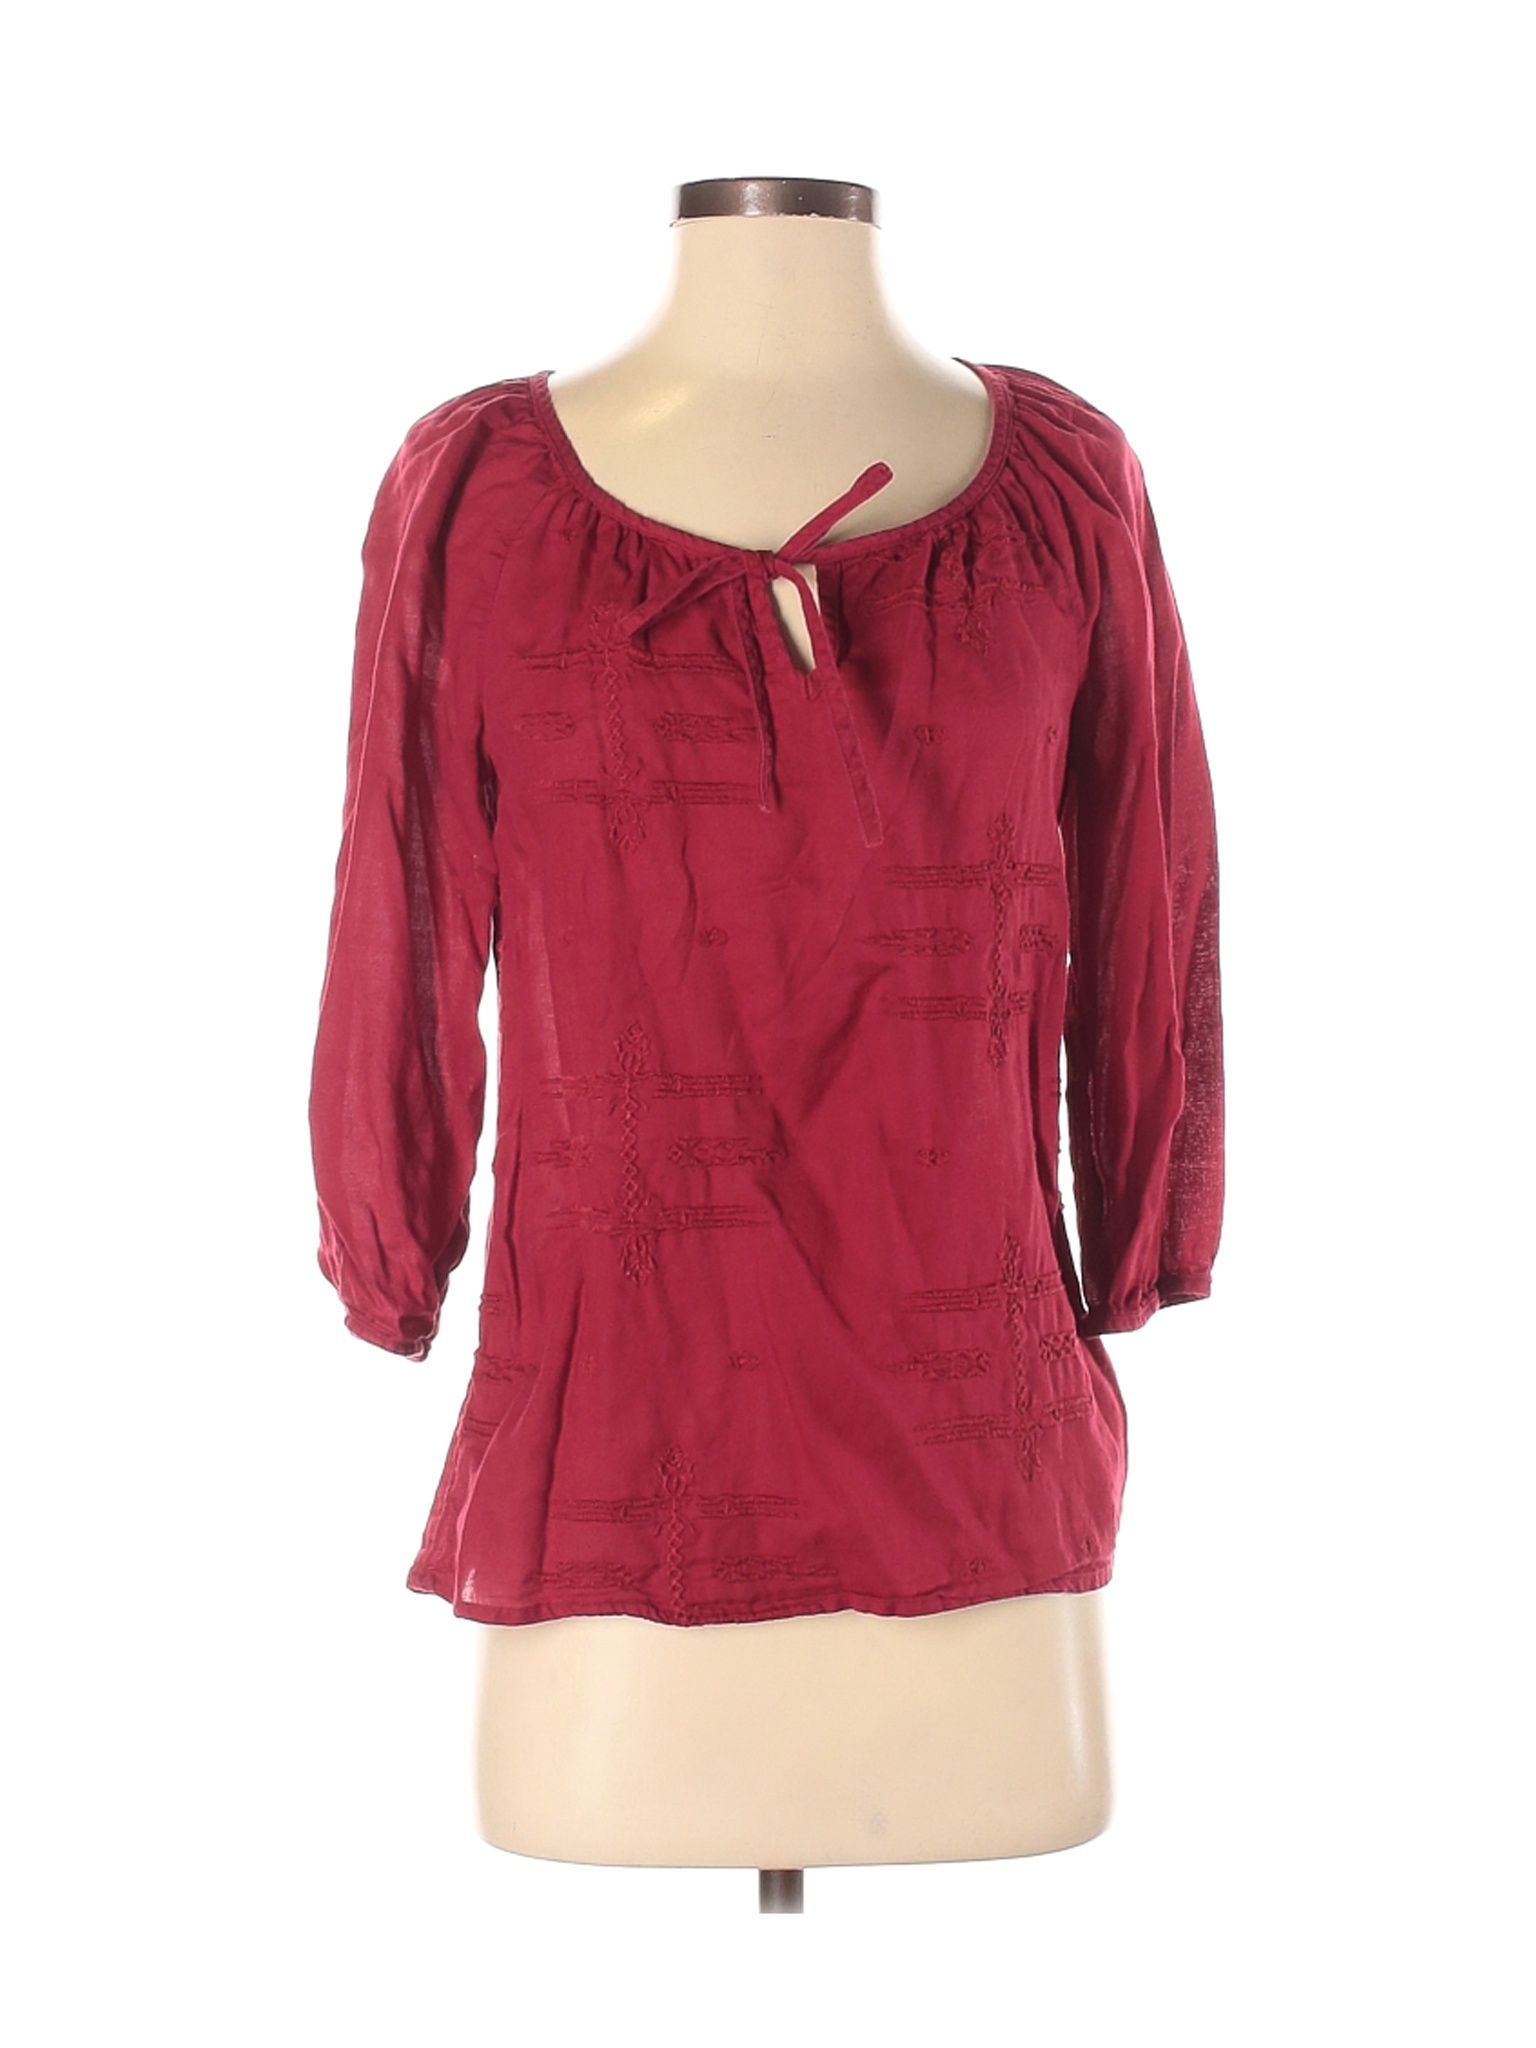 Old Navy Women Red Long Sleeve Blouse XS | eBay